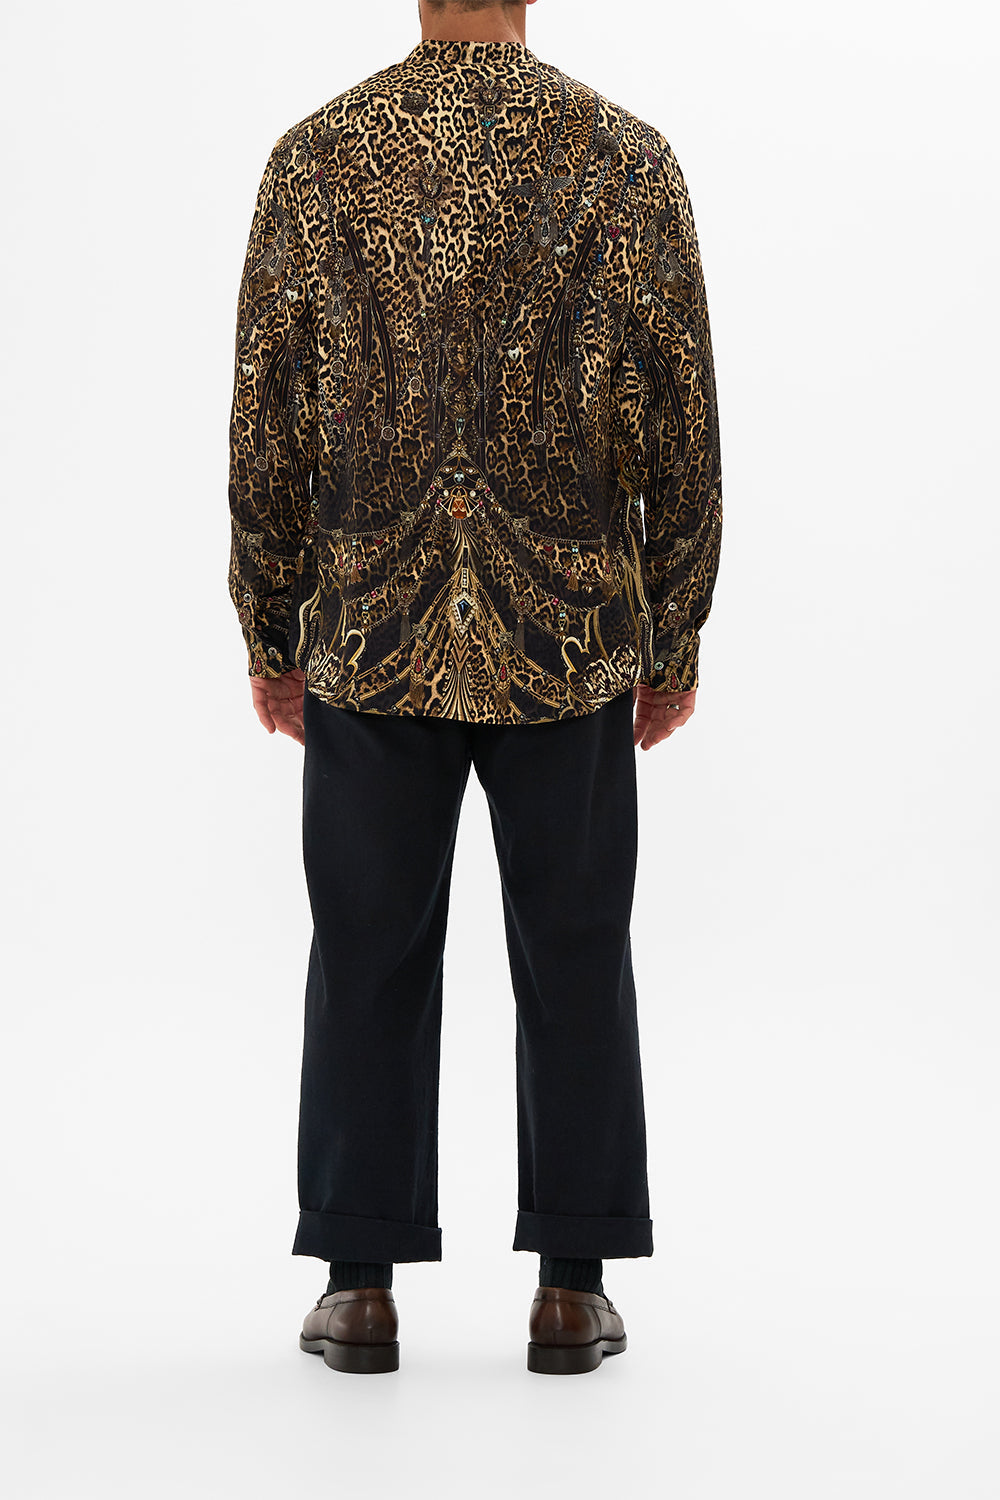 CAMILLA leopard long-sleeve mandarin collar shirt in Amsterglam print